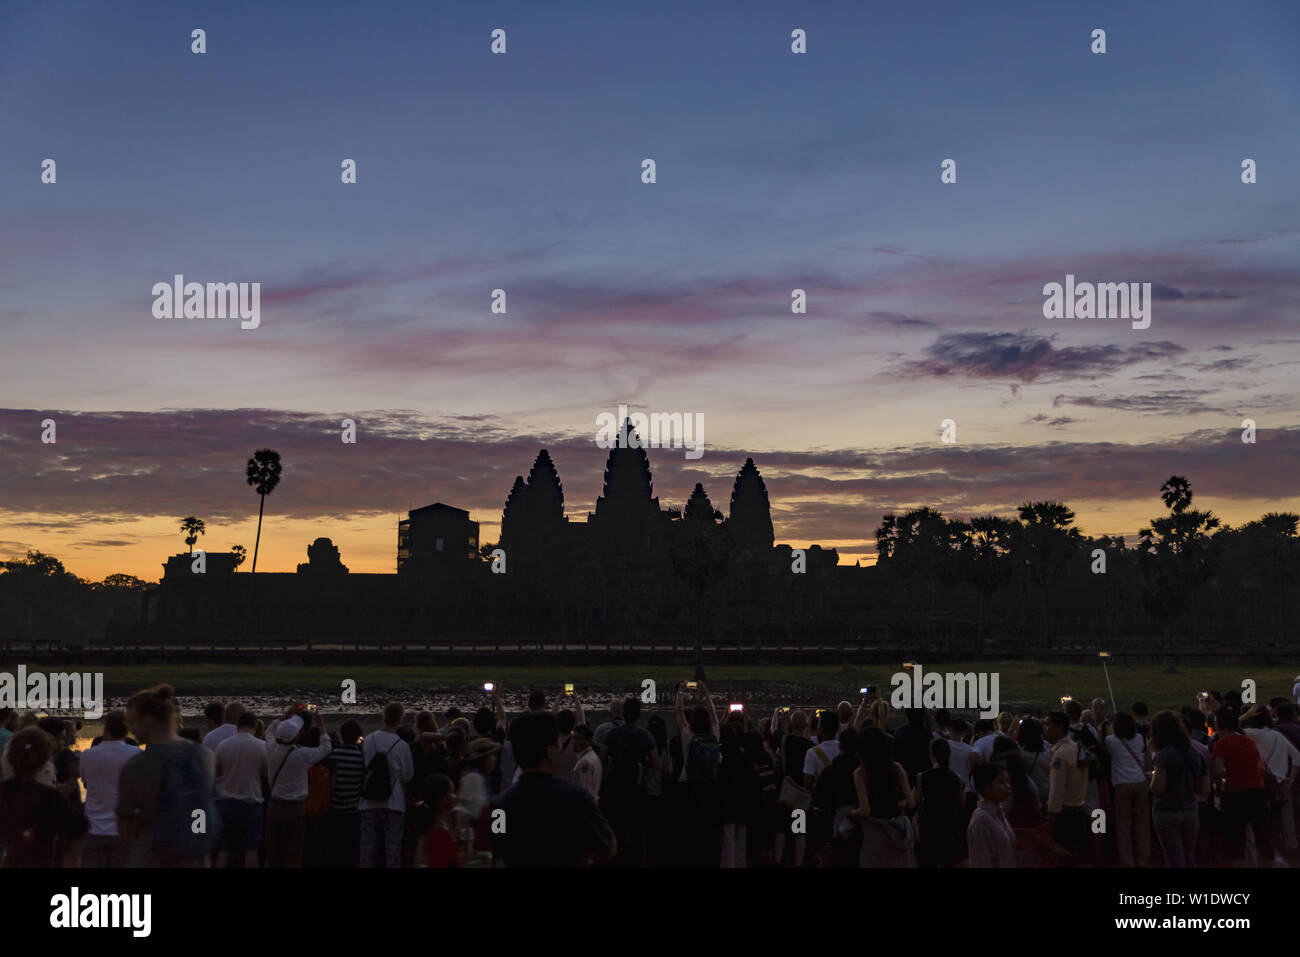 Menge fotografieren Angkor Wat bei Sonnenaufgang Hauptfassade Silhouette. Welt berühmten Tempel der Massentourismus in Kambodscha. Stockfoto